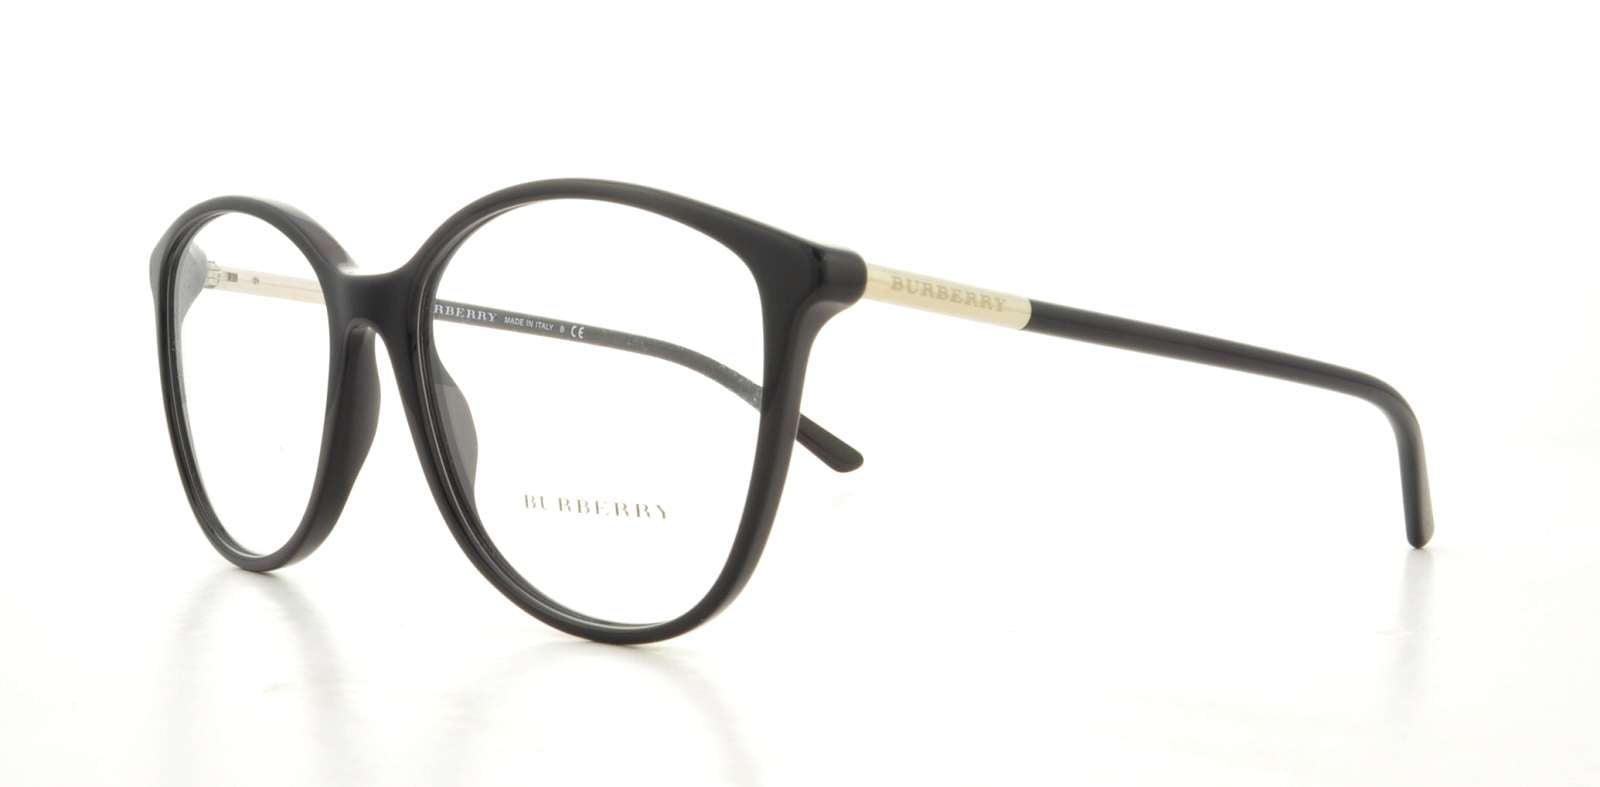 burberry glasses frames costco